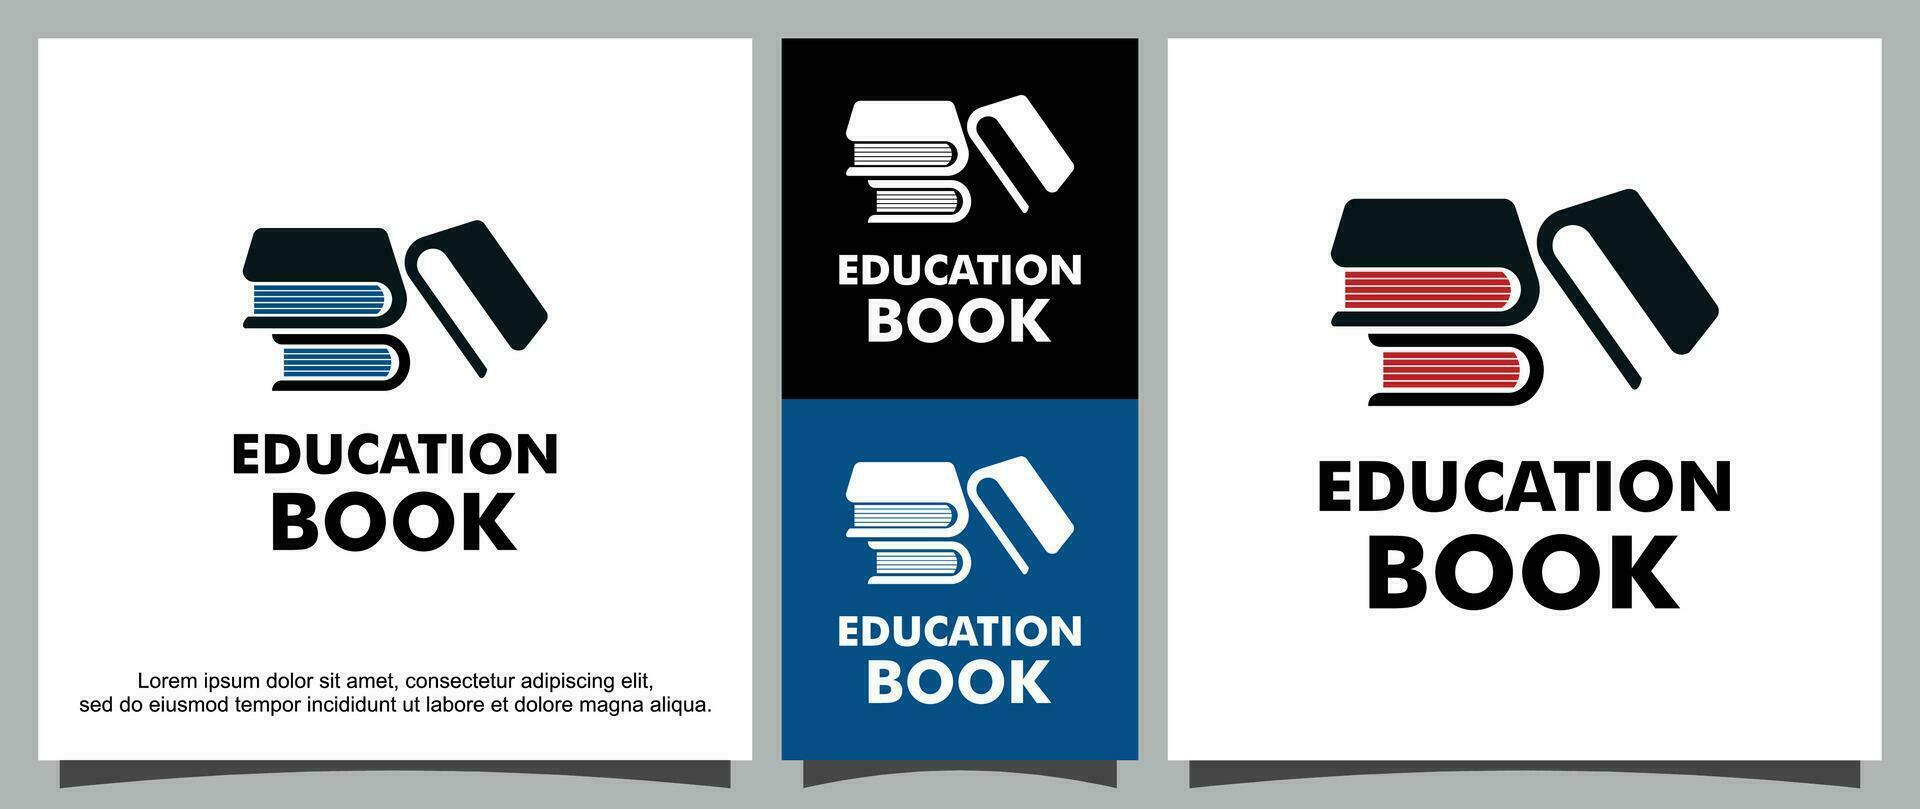 Books for education logo template vector